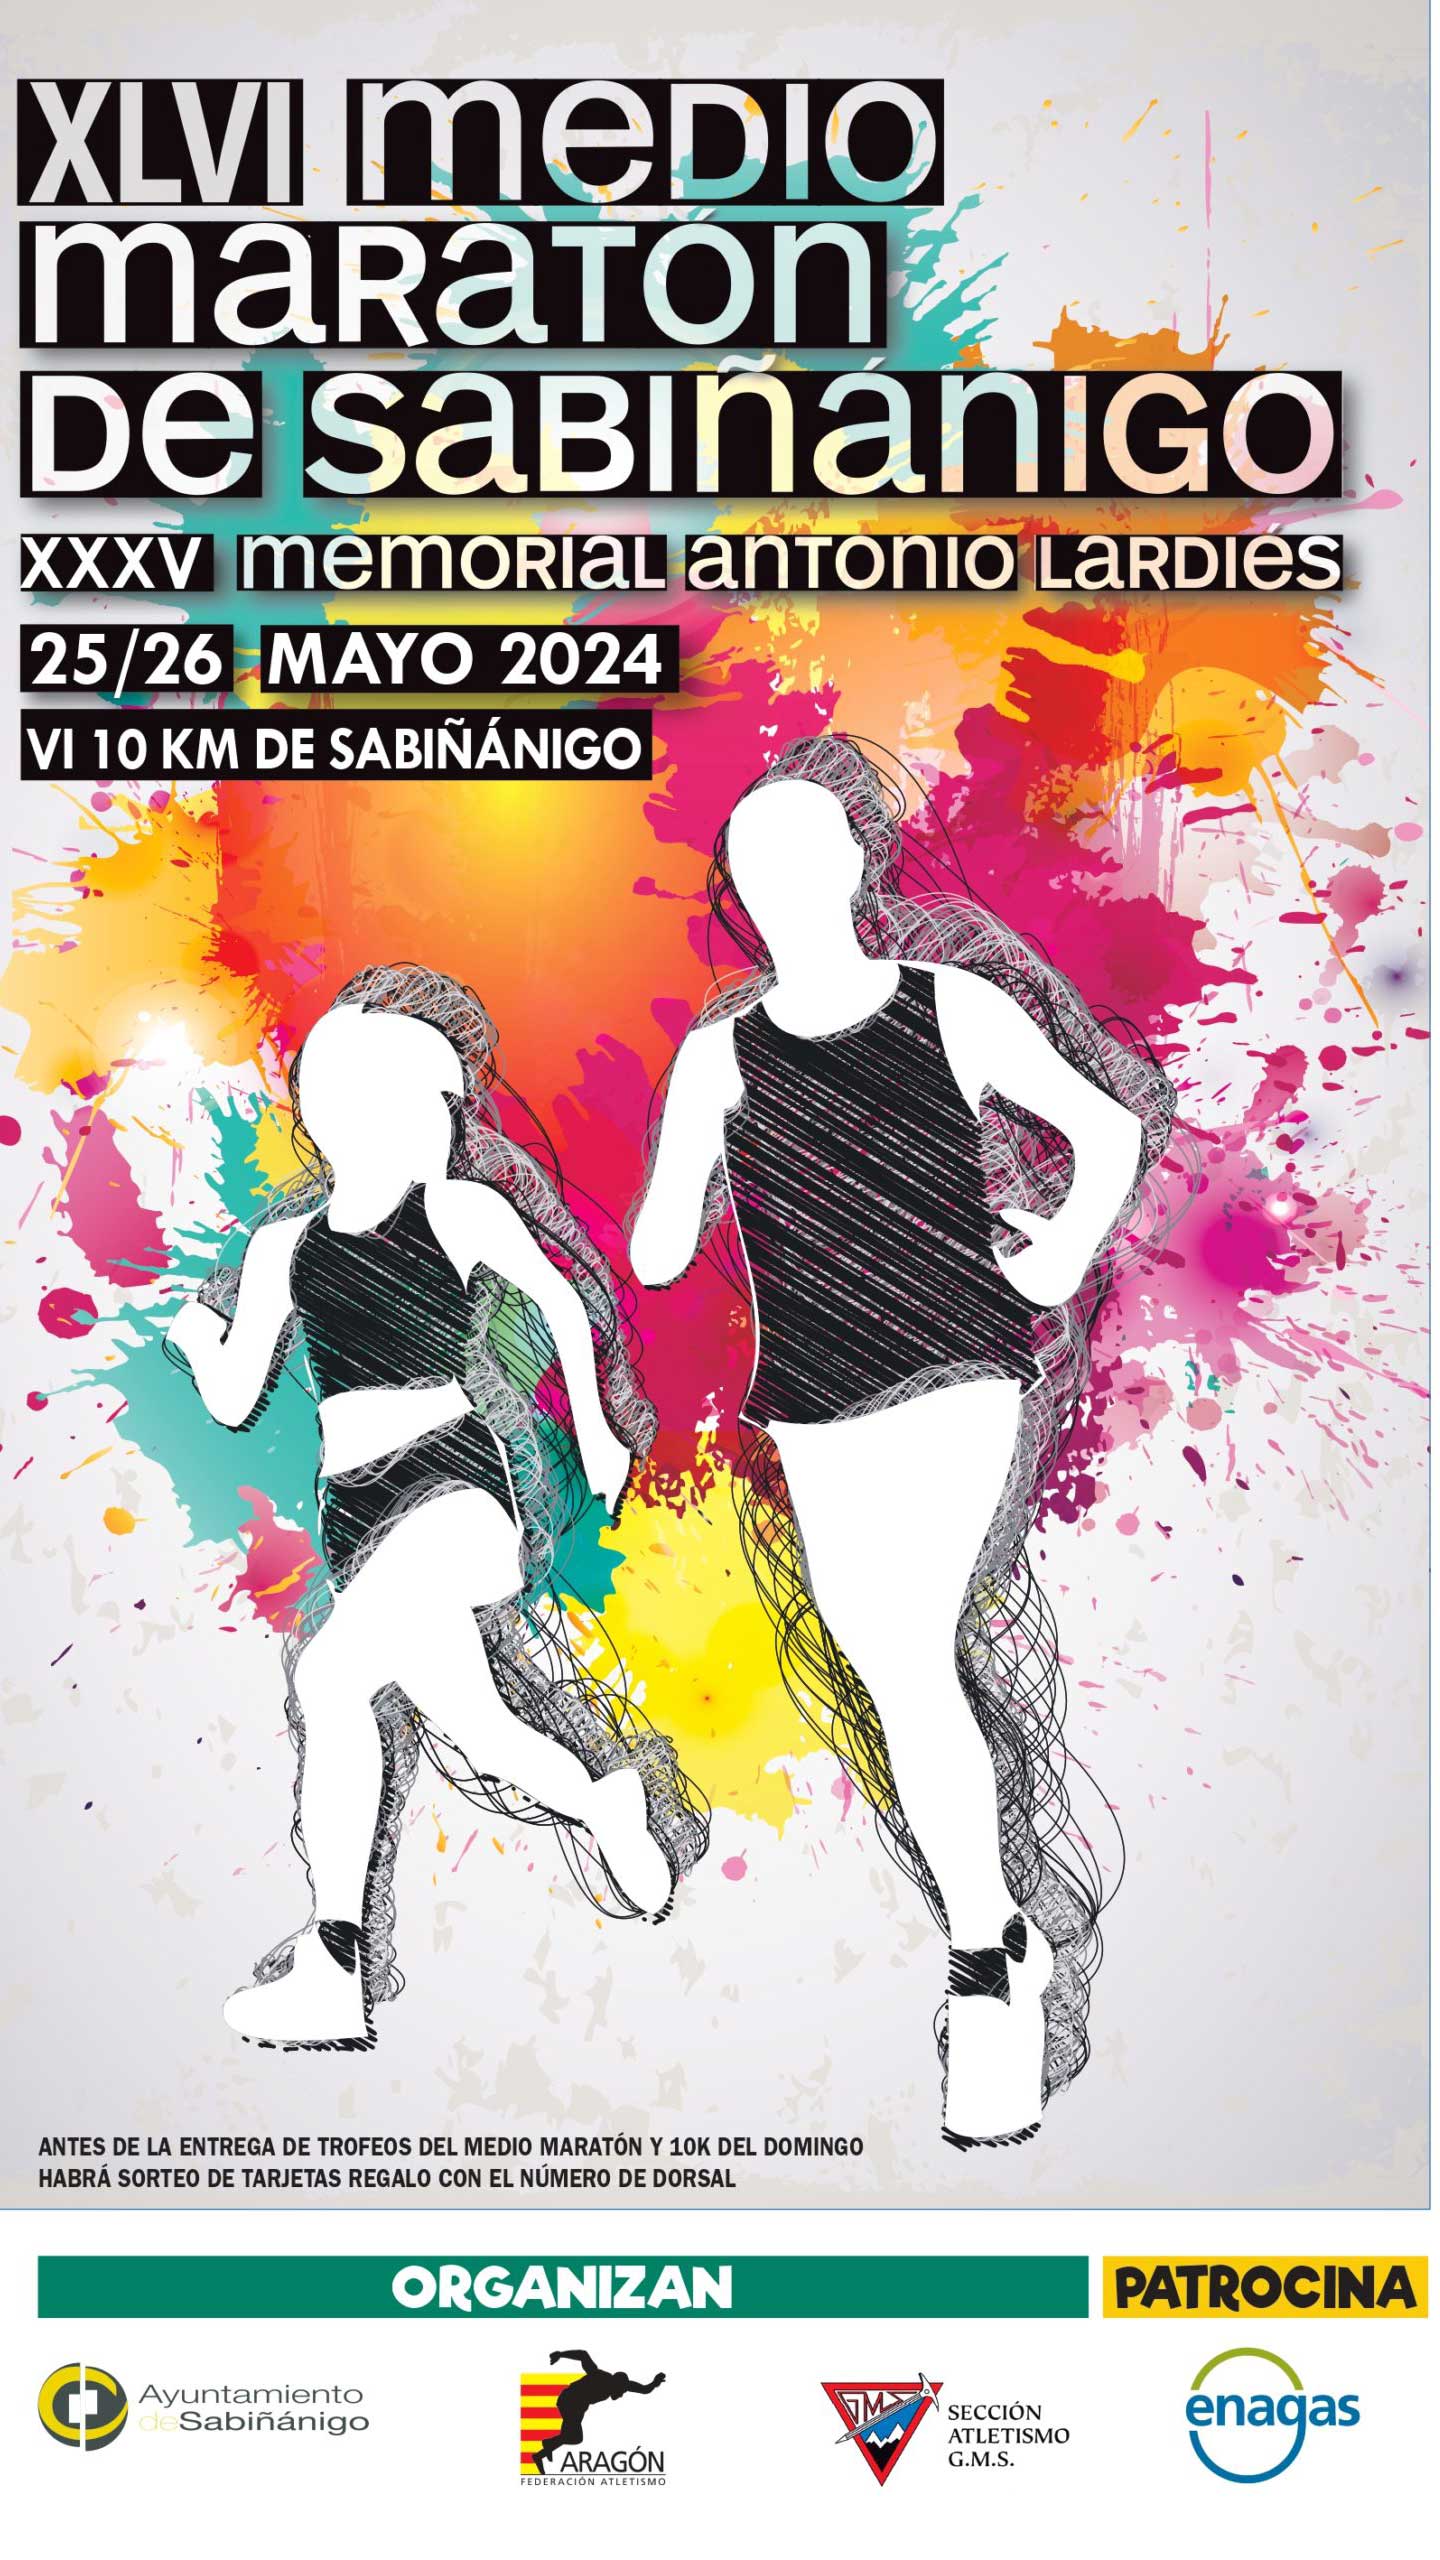 XLVI Medio Maratón de Sabiñánigo y VI 10K XXXV Memorial Antonio Lardiés 2024